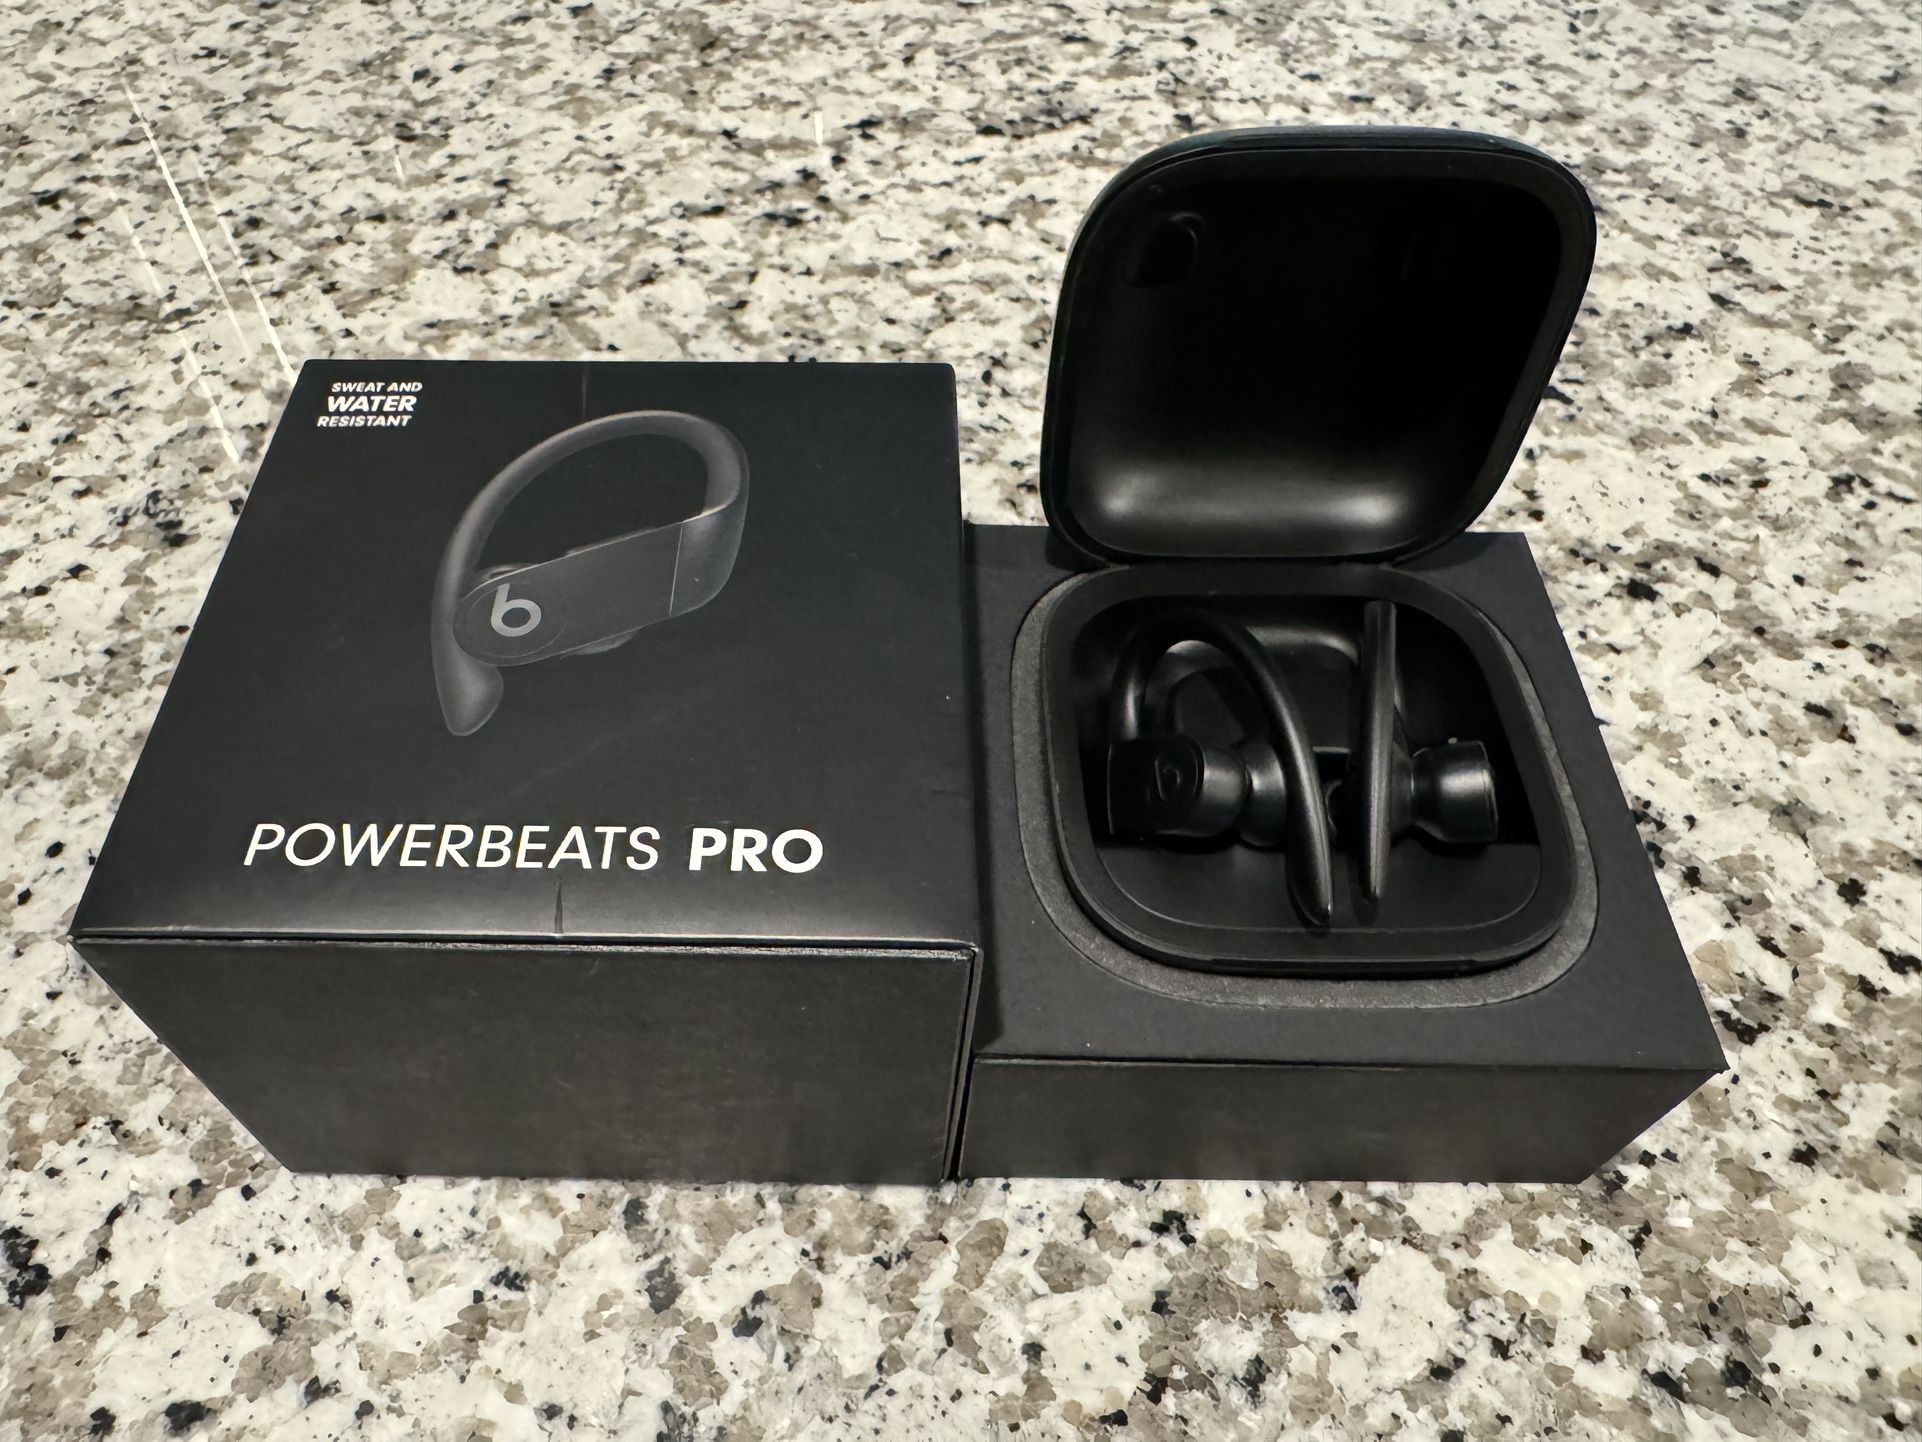 Power Beats Pro $150